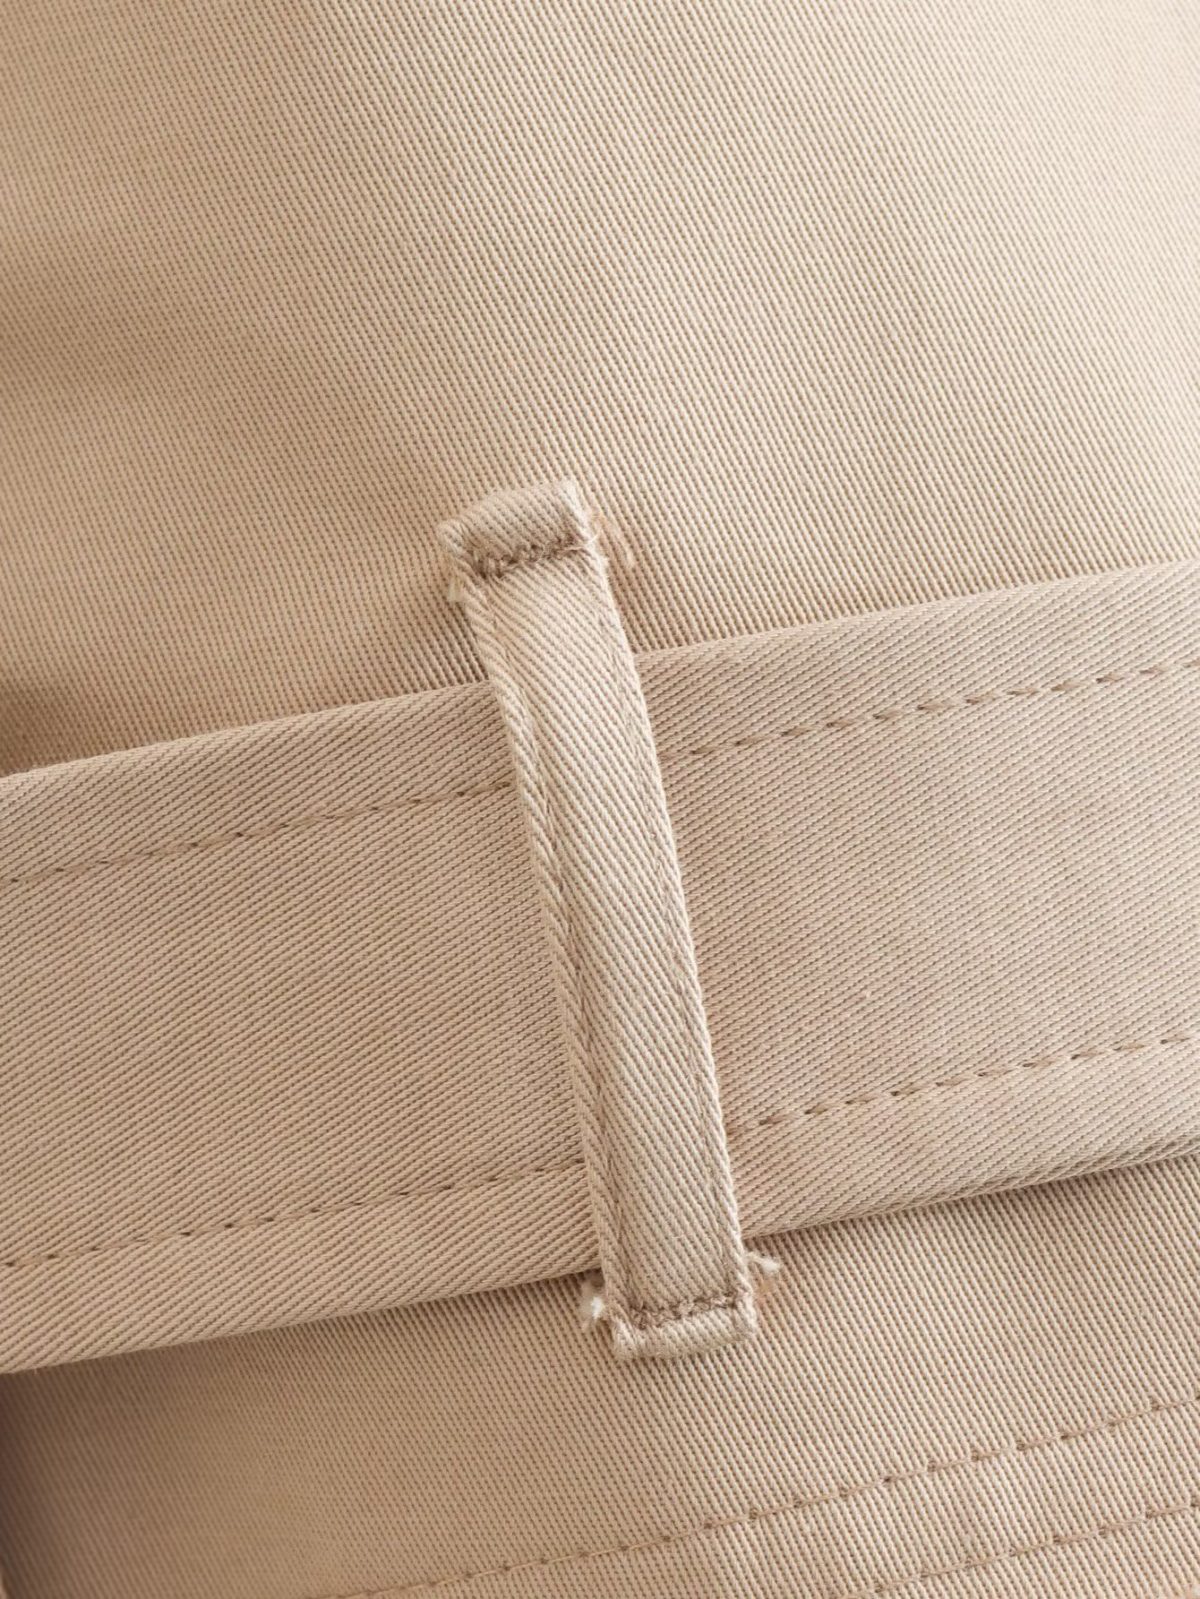 Long Sleeve Casual Trench Coat - Coats & Jackets - Uniqistic.com